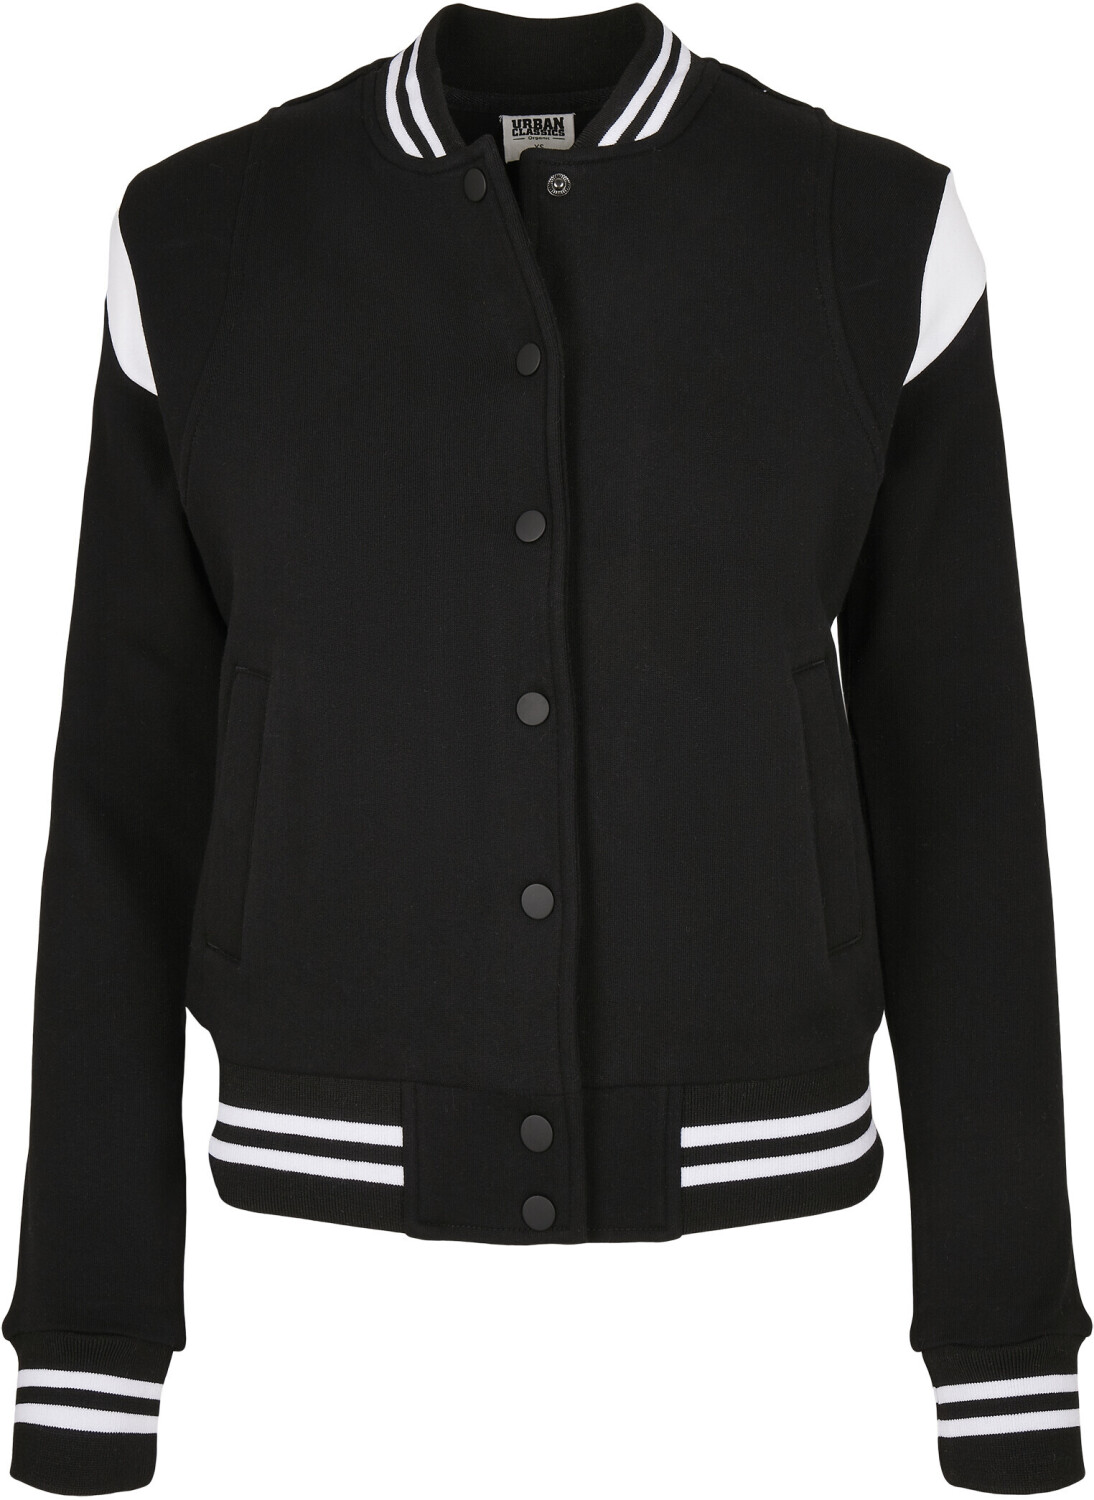 Urban Classics Ladies Organic Inset College Sweat Jacket  (TB3776-00826-0037) black/white ab 36,79 € | Preisvergleich bei